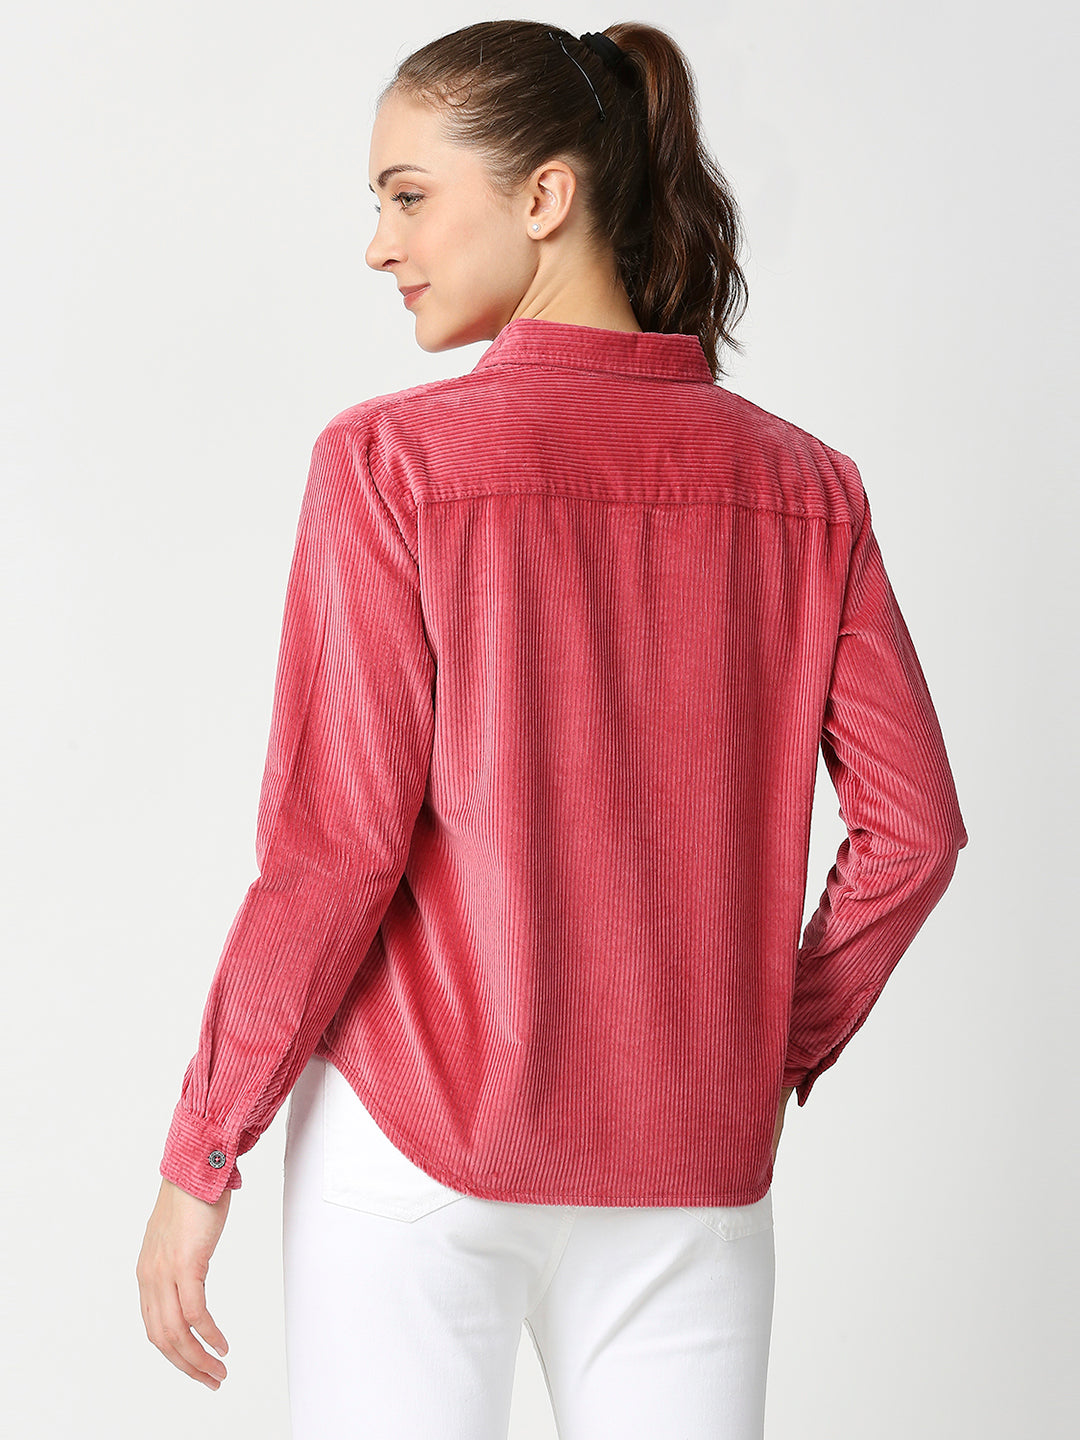 Buy Blamblack Women's Fussia Color Full Sleeves Shirt